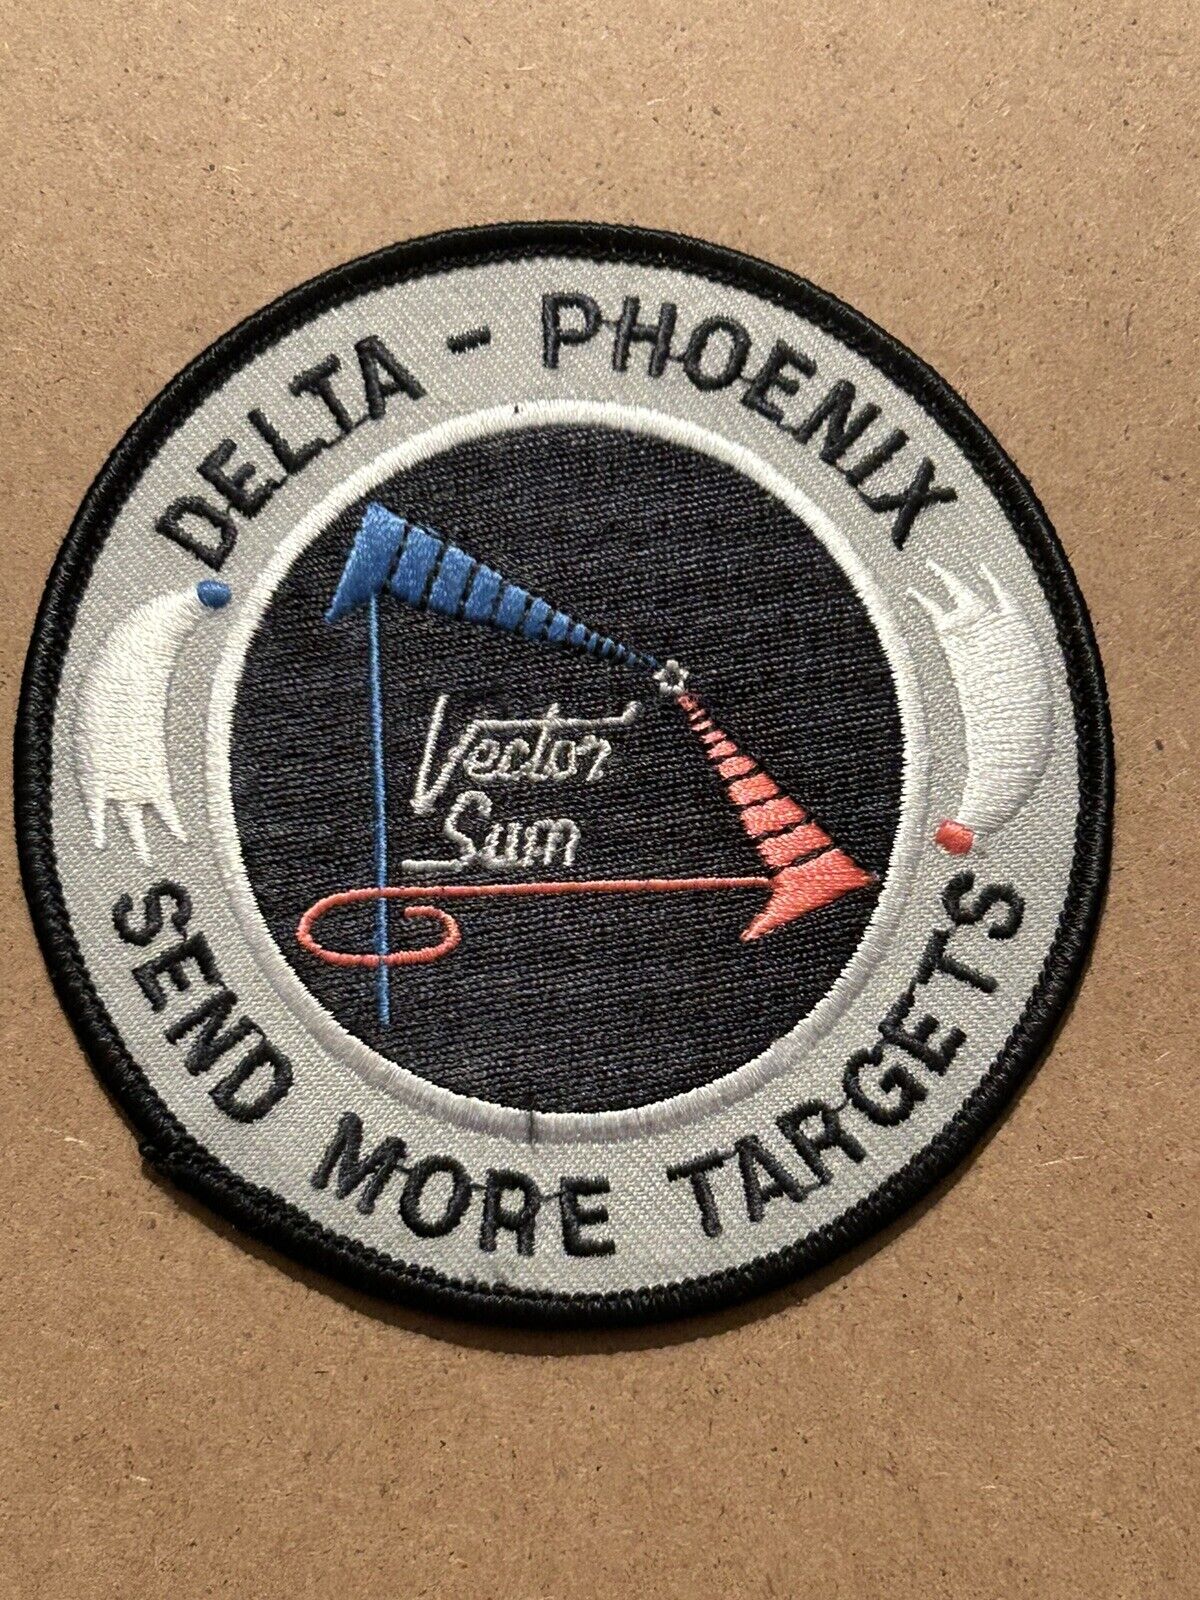 NASA SDIO Delta Phoenix Vector Sum Program Boost Phase Intercept ICBM Patch